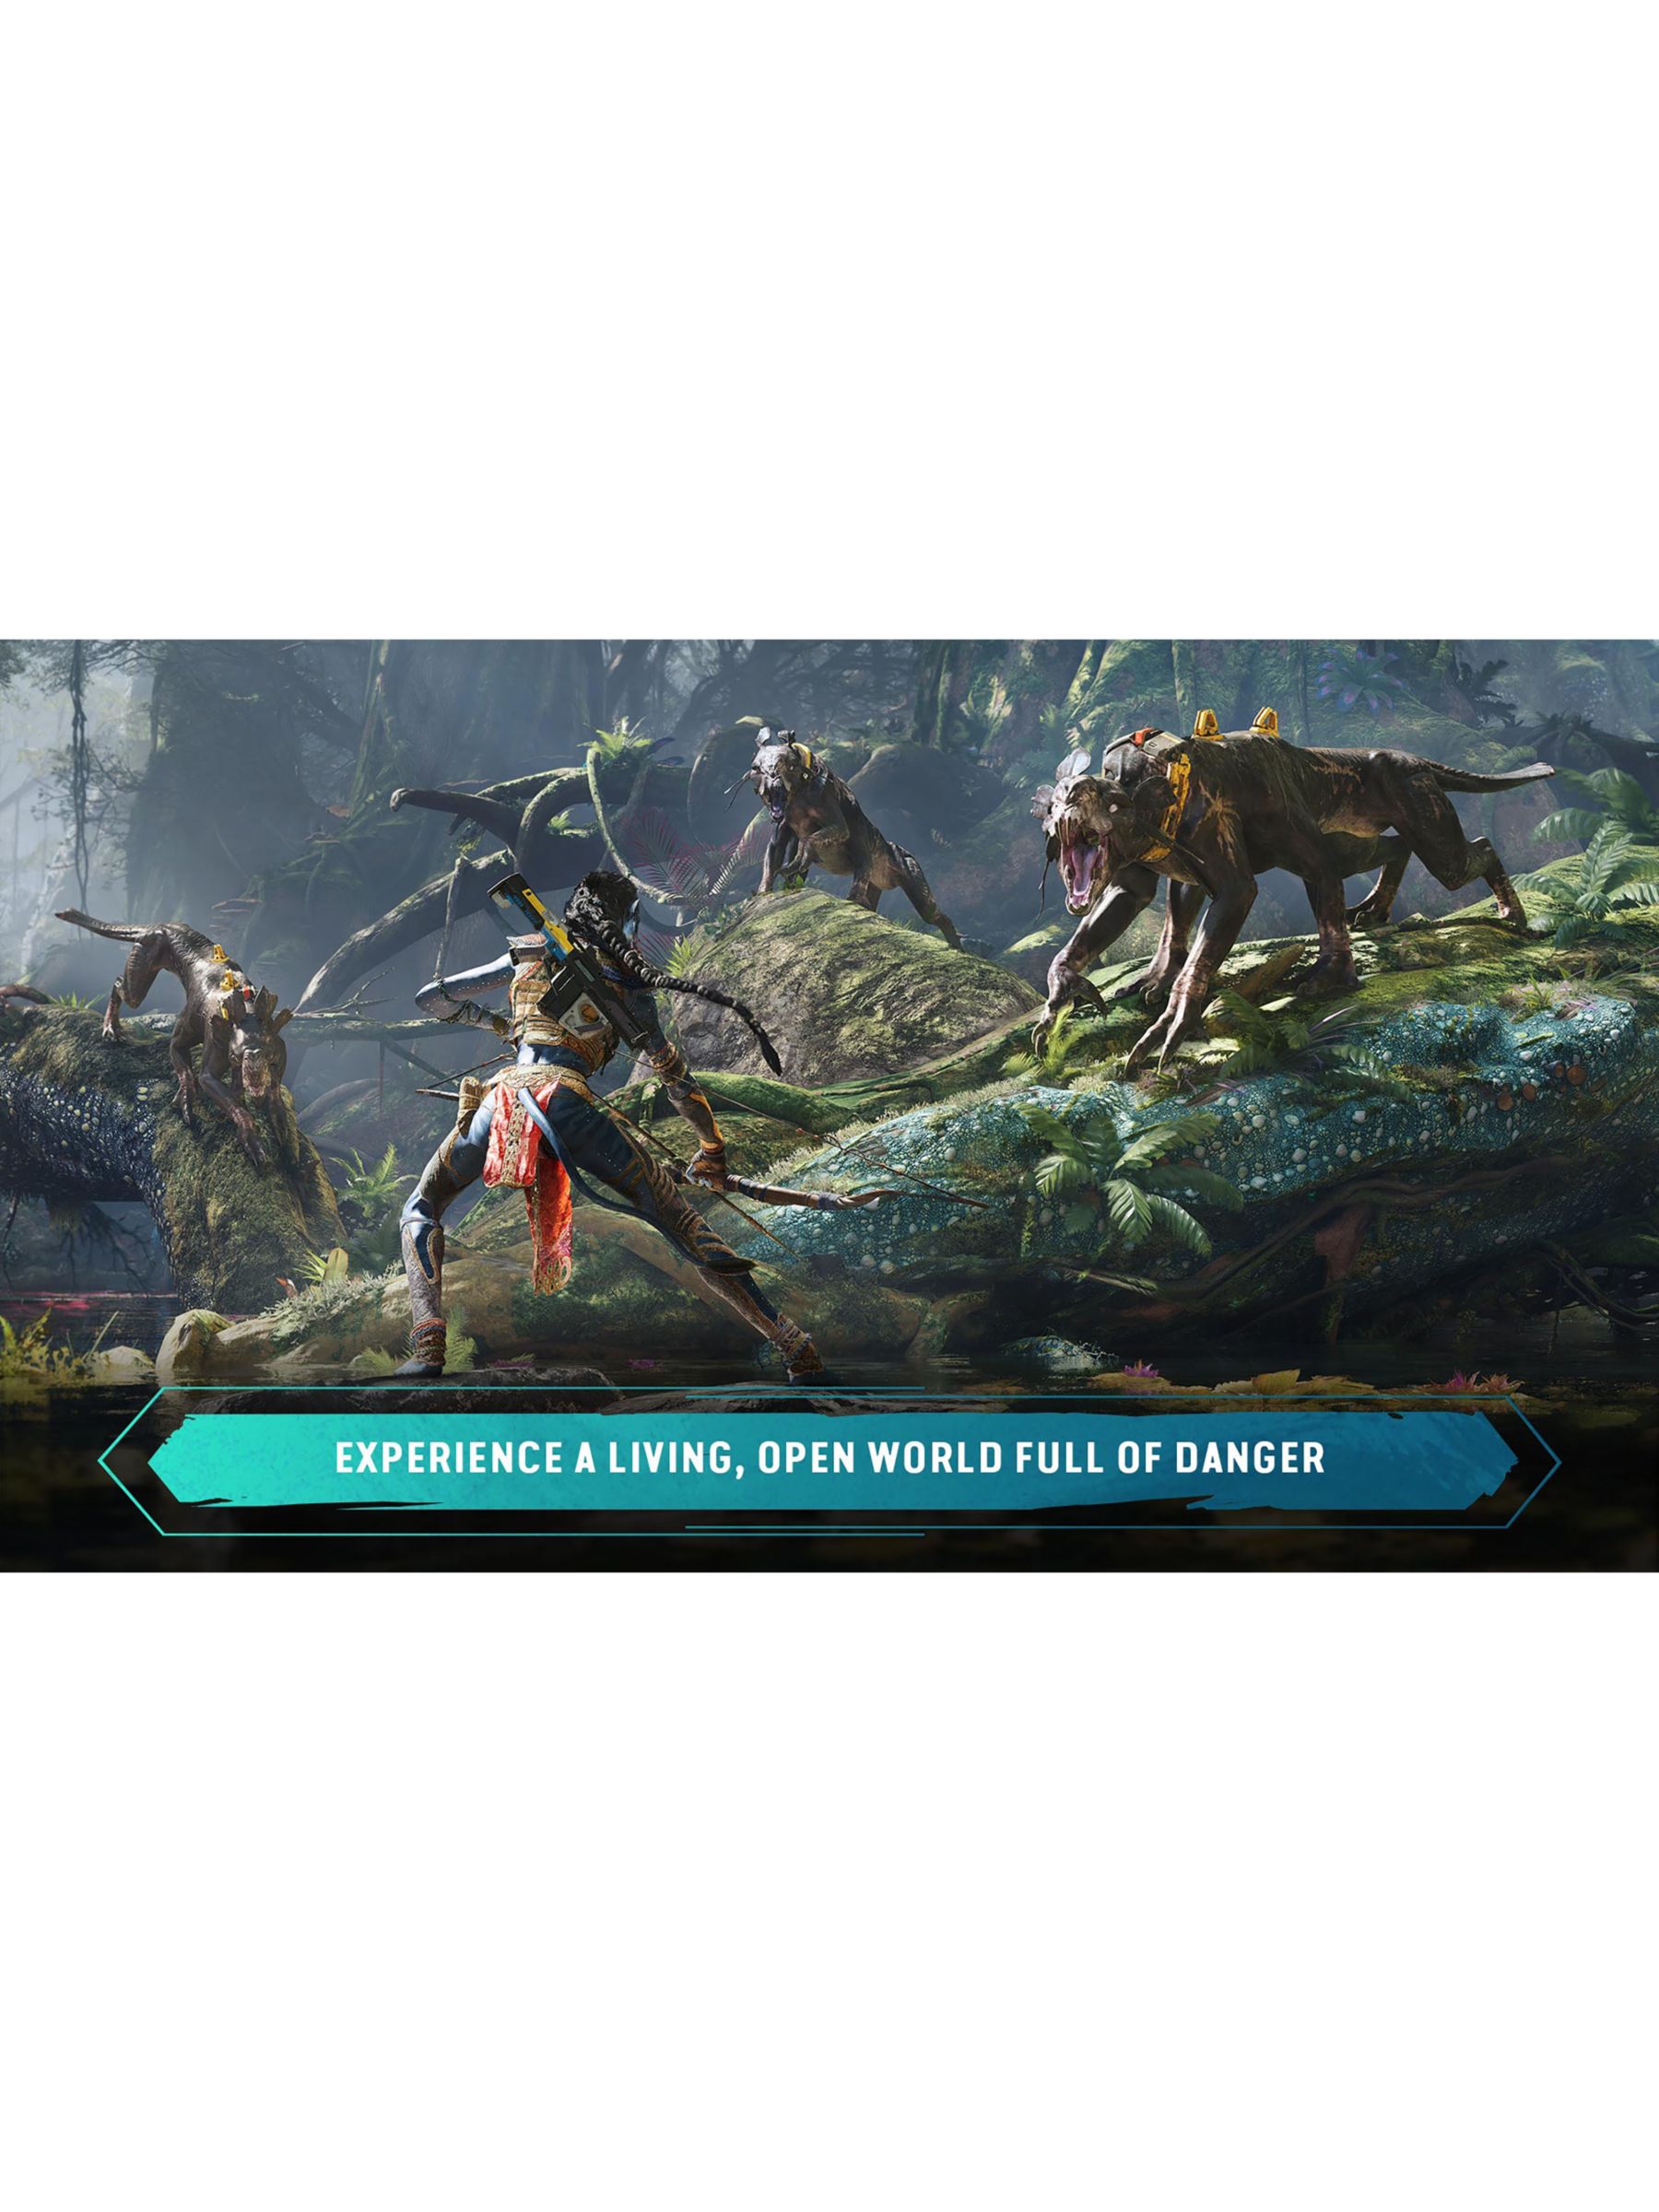 Avatar: Frontiers of Pandora, PS5